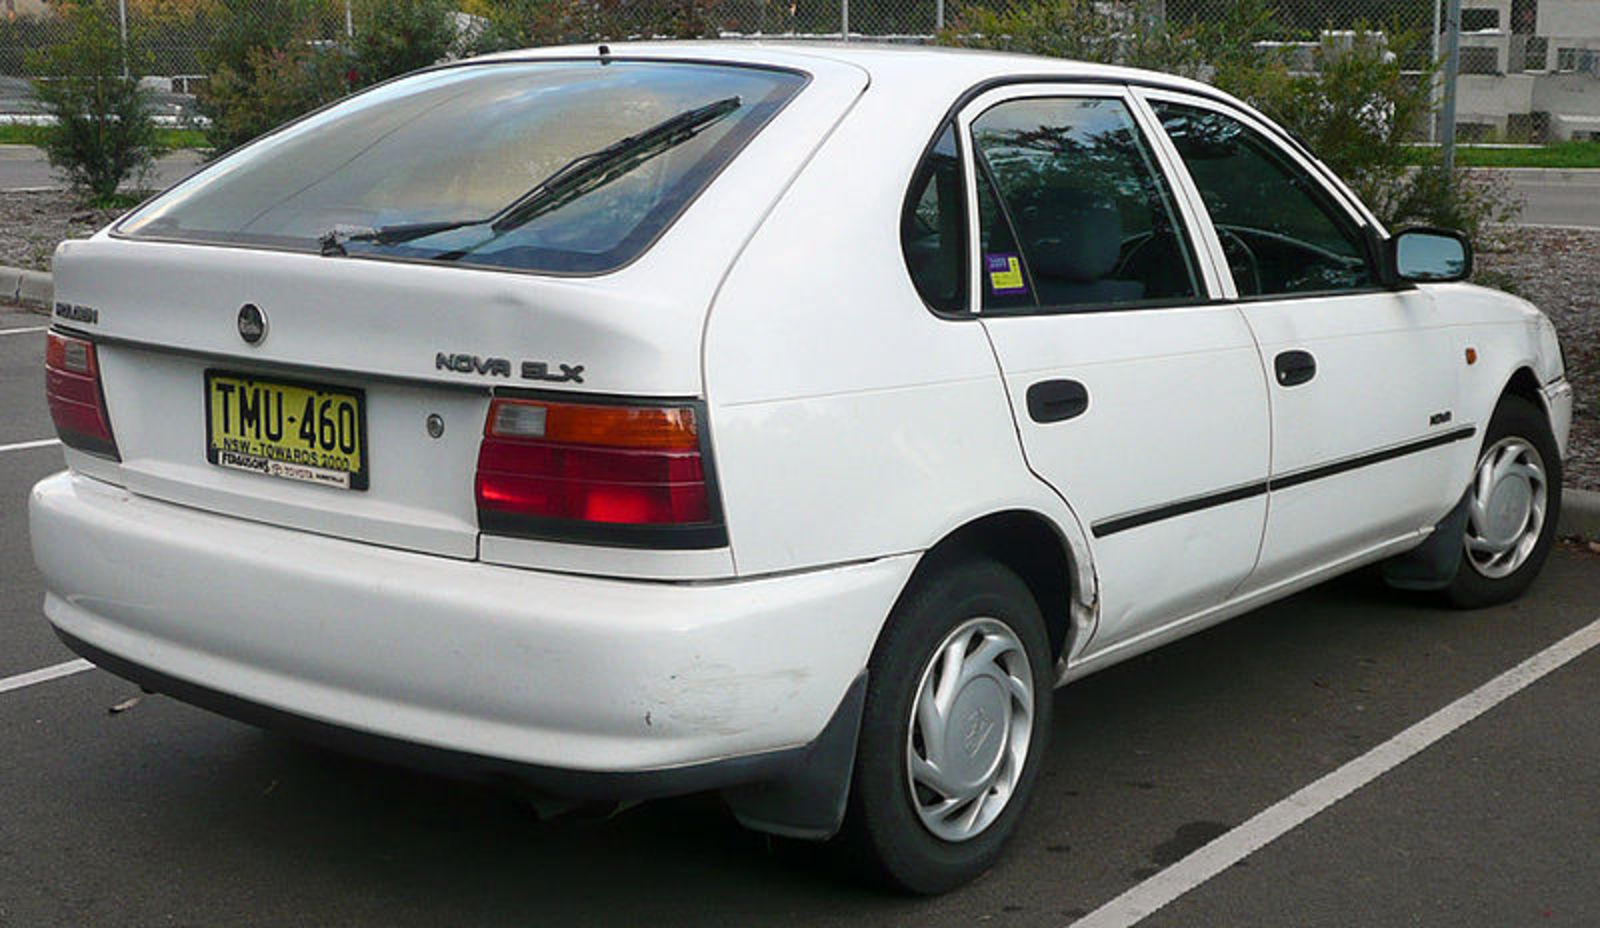 Holden Nova hatch